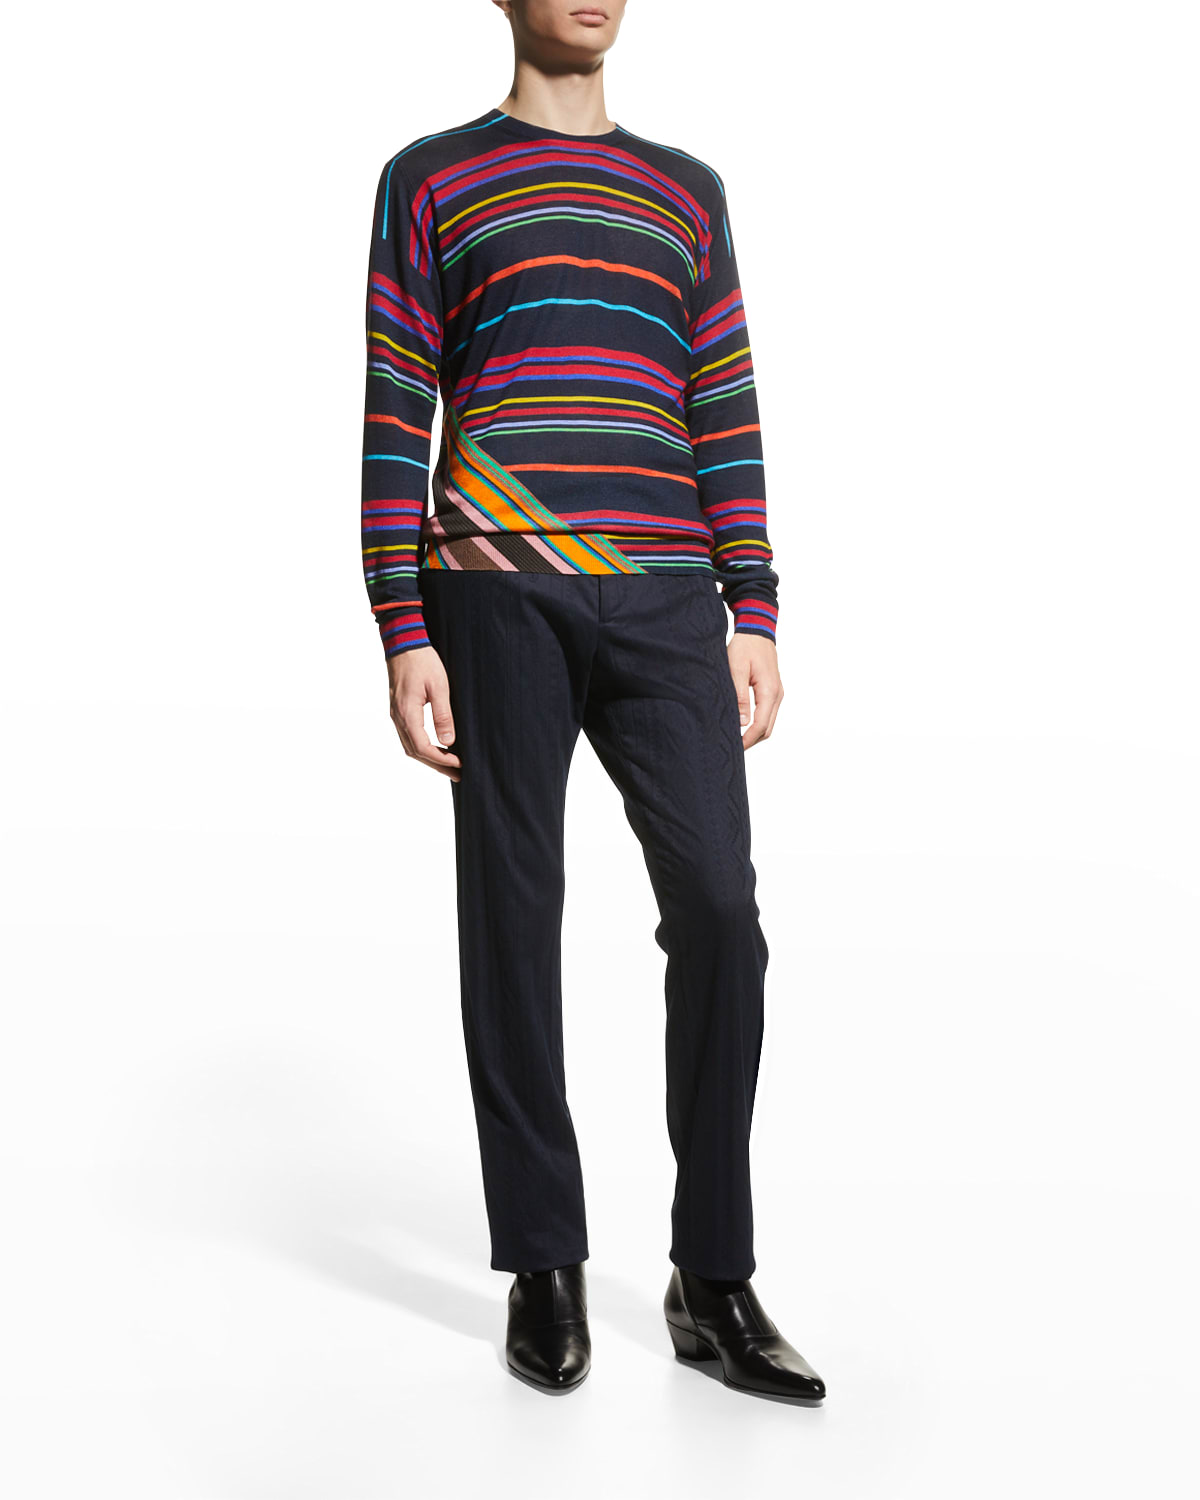 Etro Men's Fruitstripe Multicolor Sweater